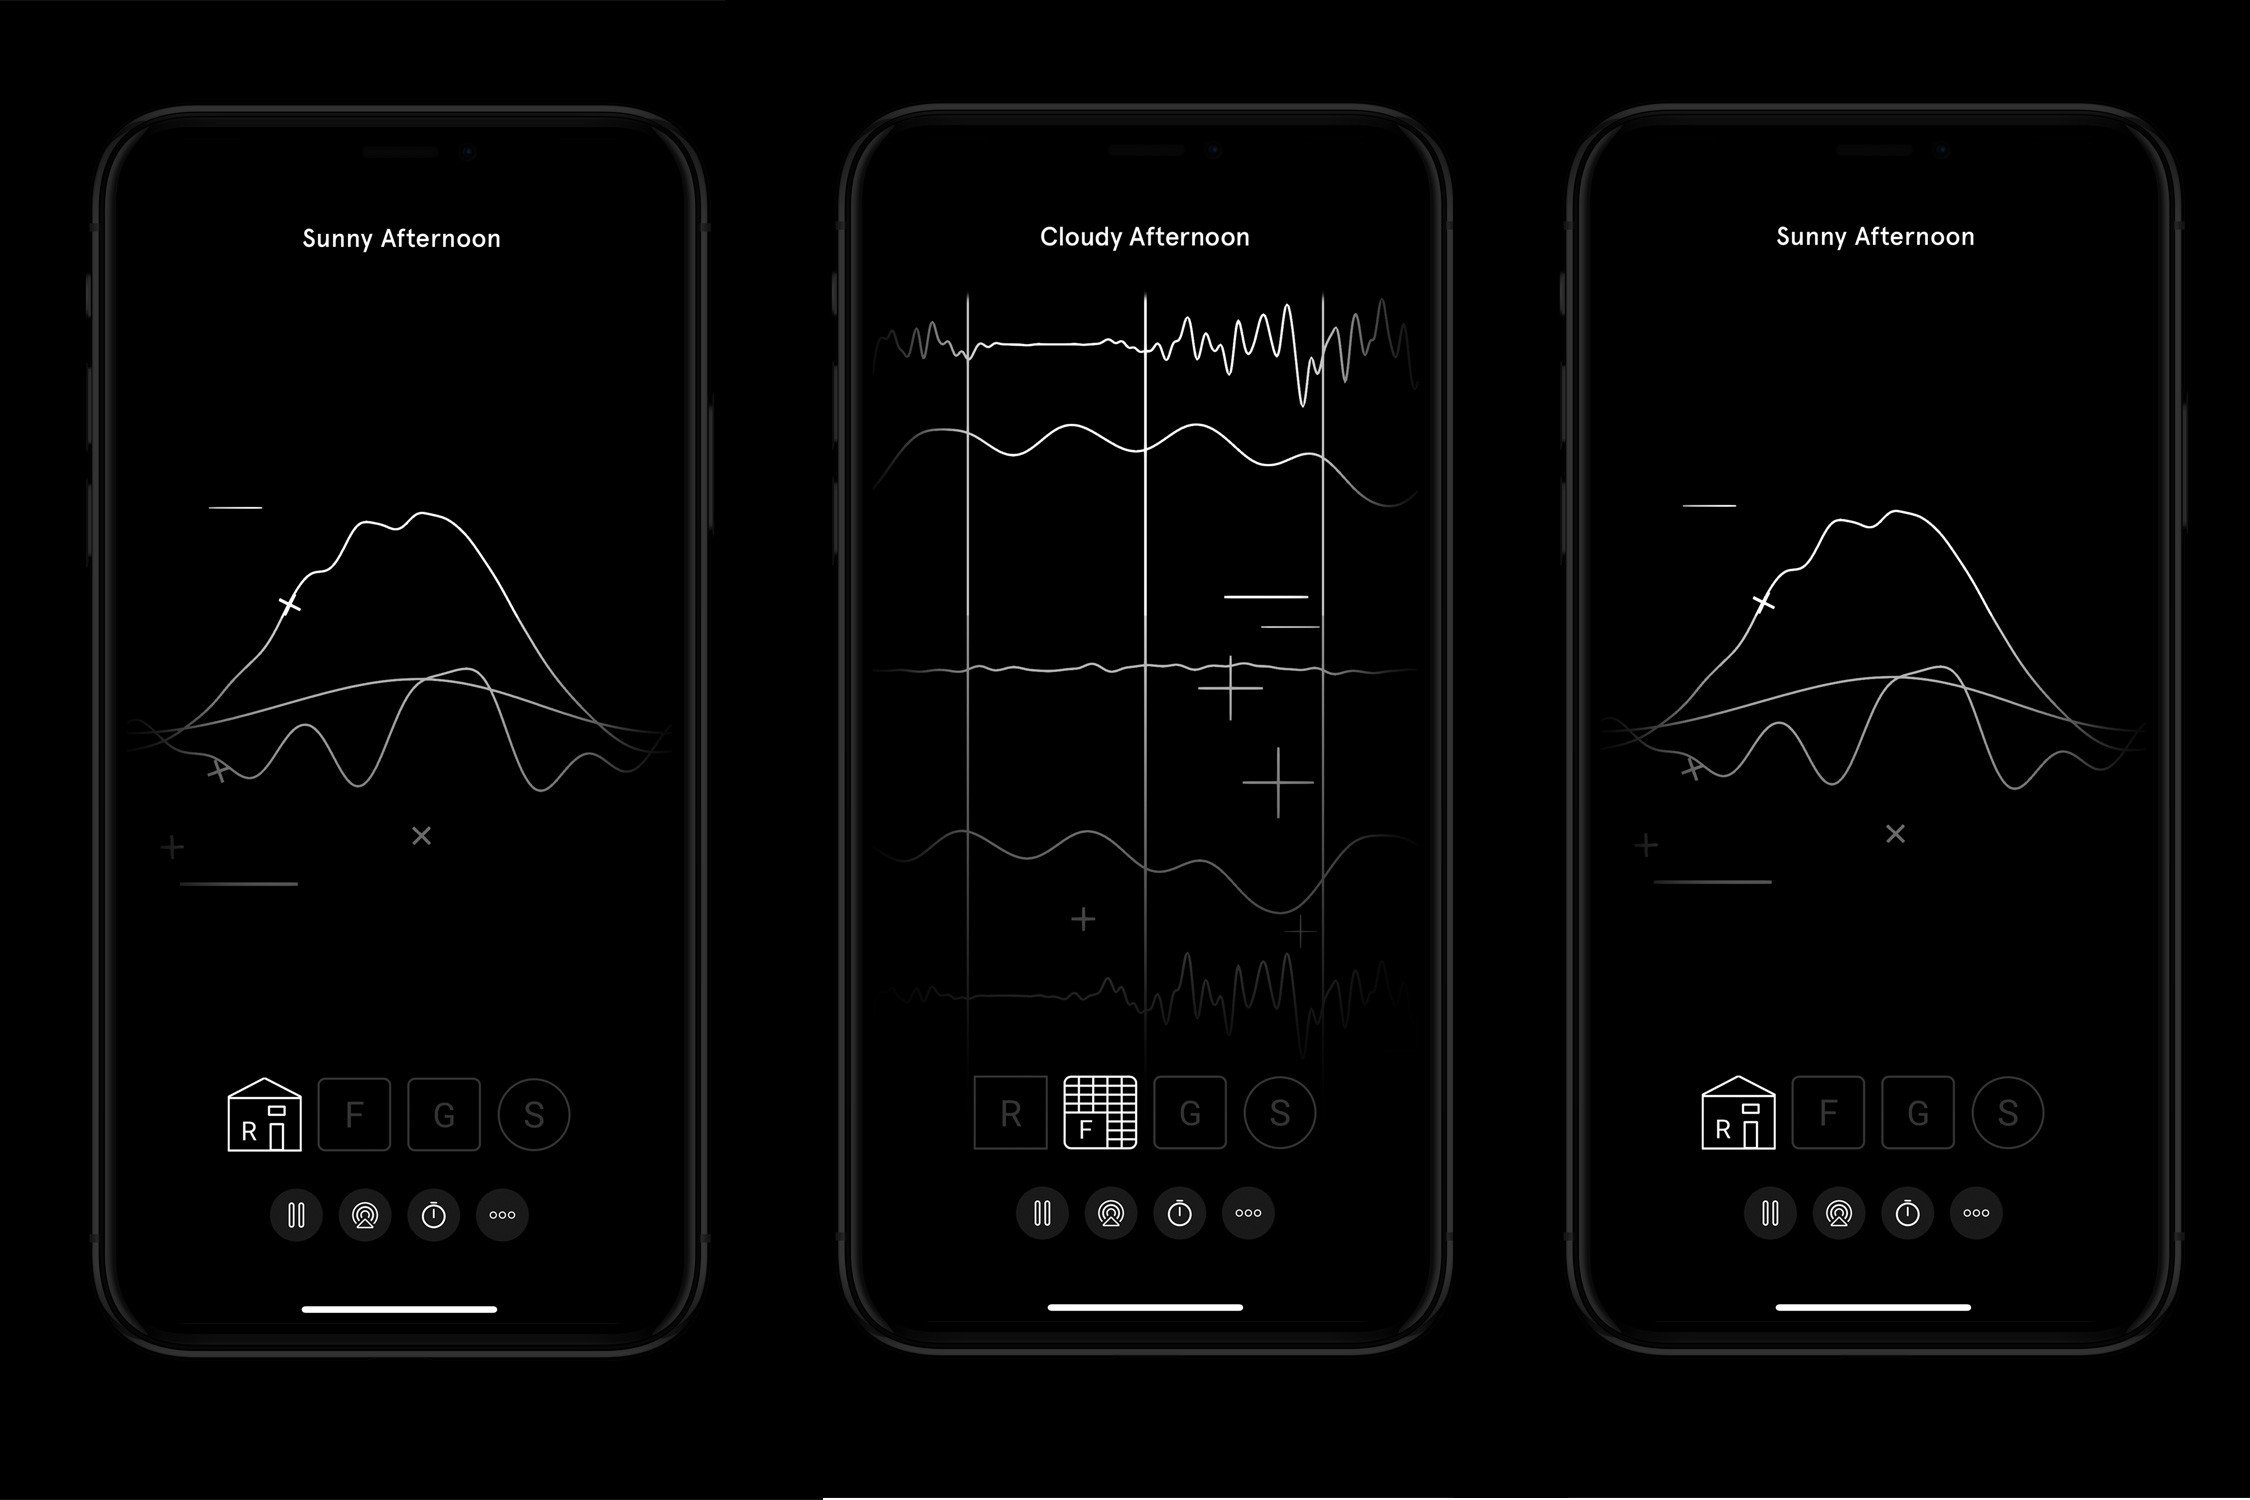 Screenshots of the Endel app. Source: Endel